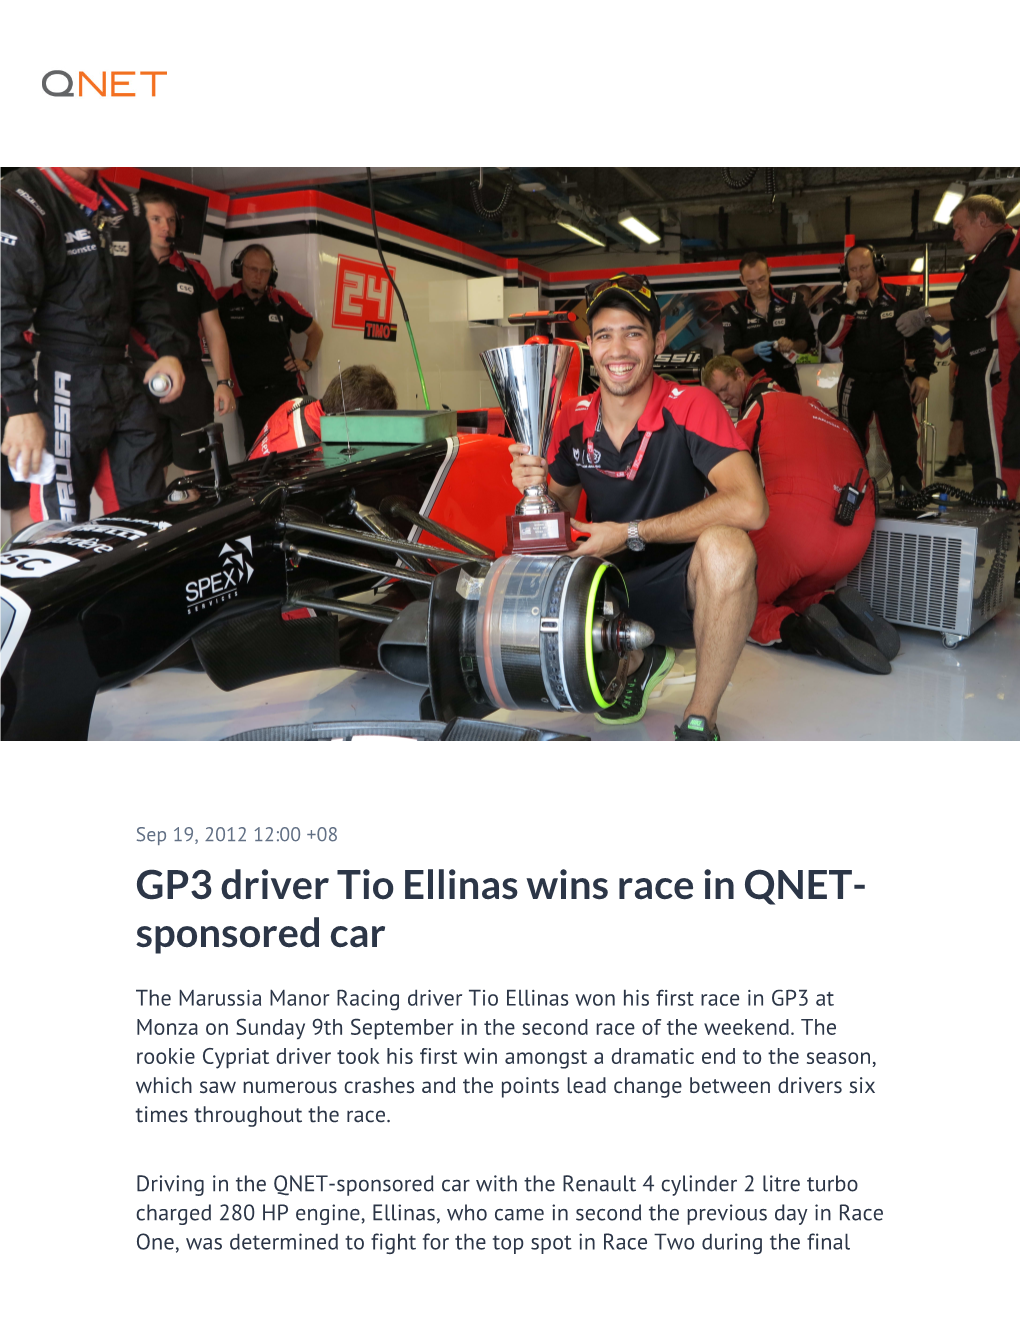 GP3 Driver Tio Ellinas Wins Race in QNET-Sponsored